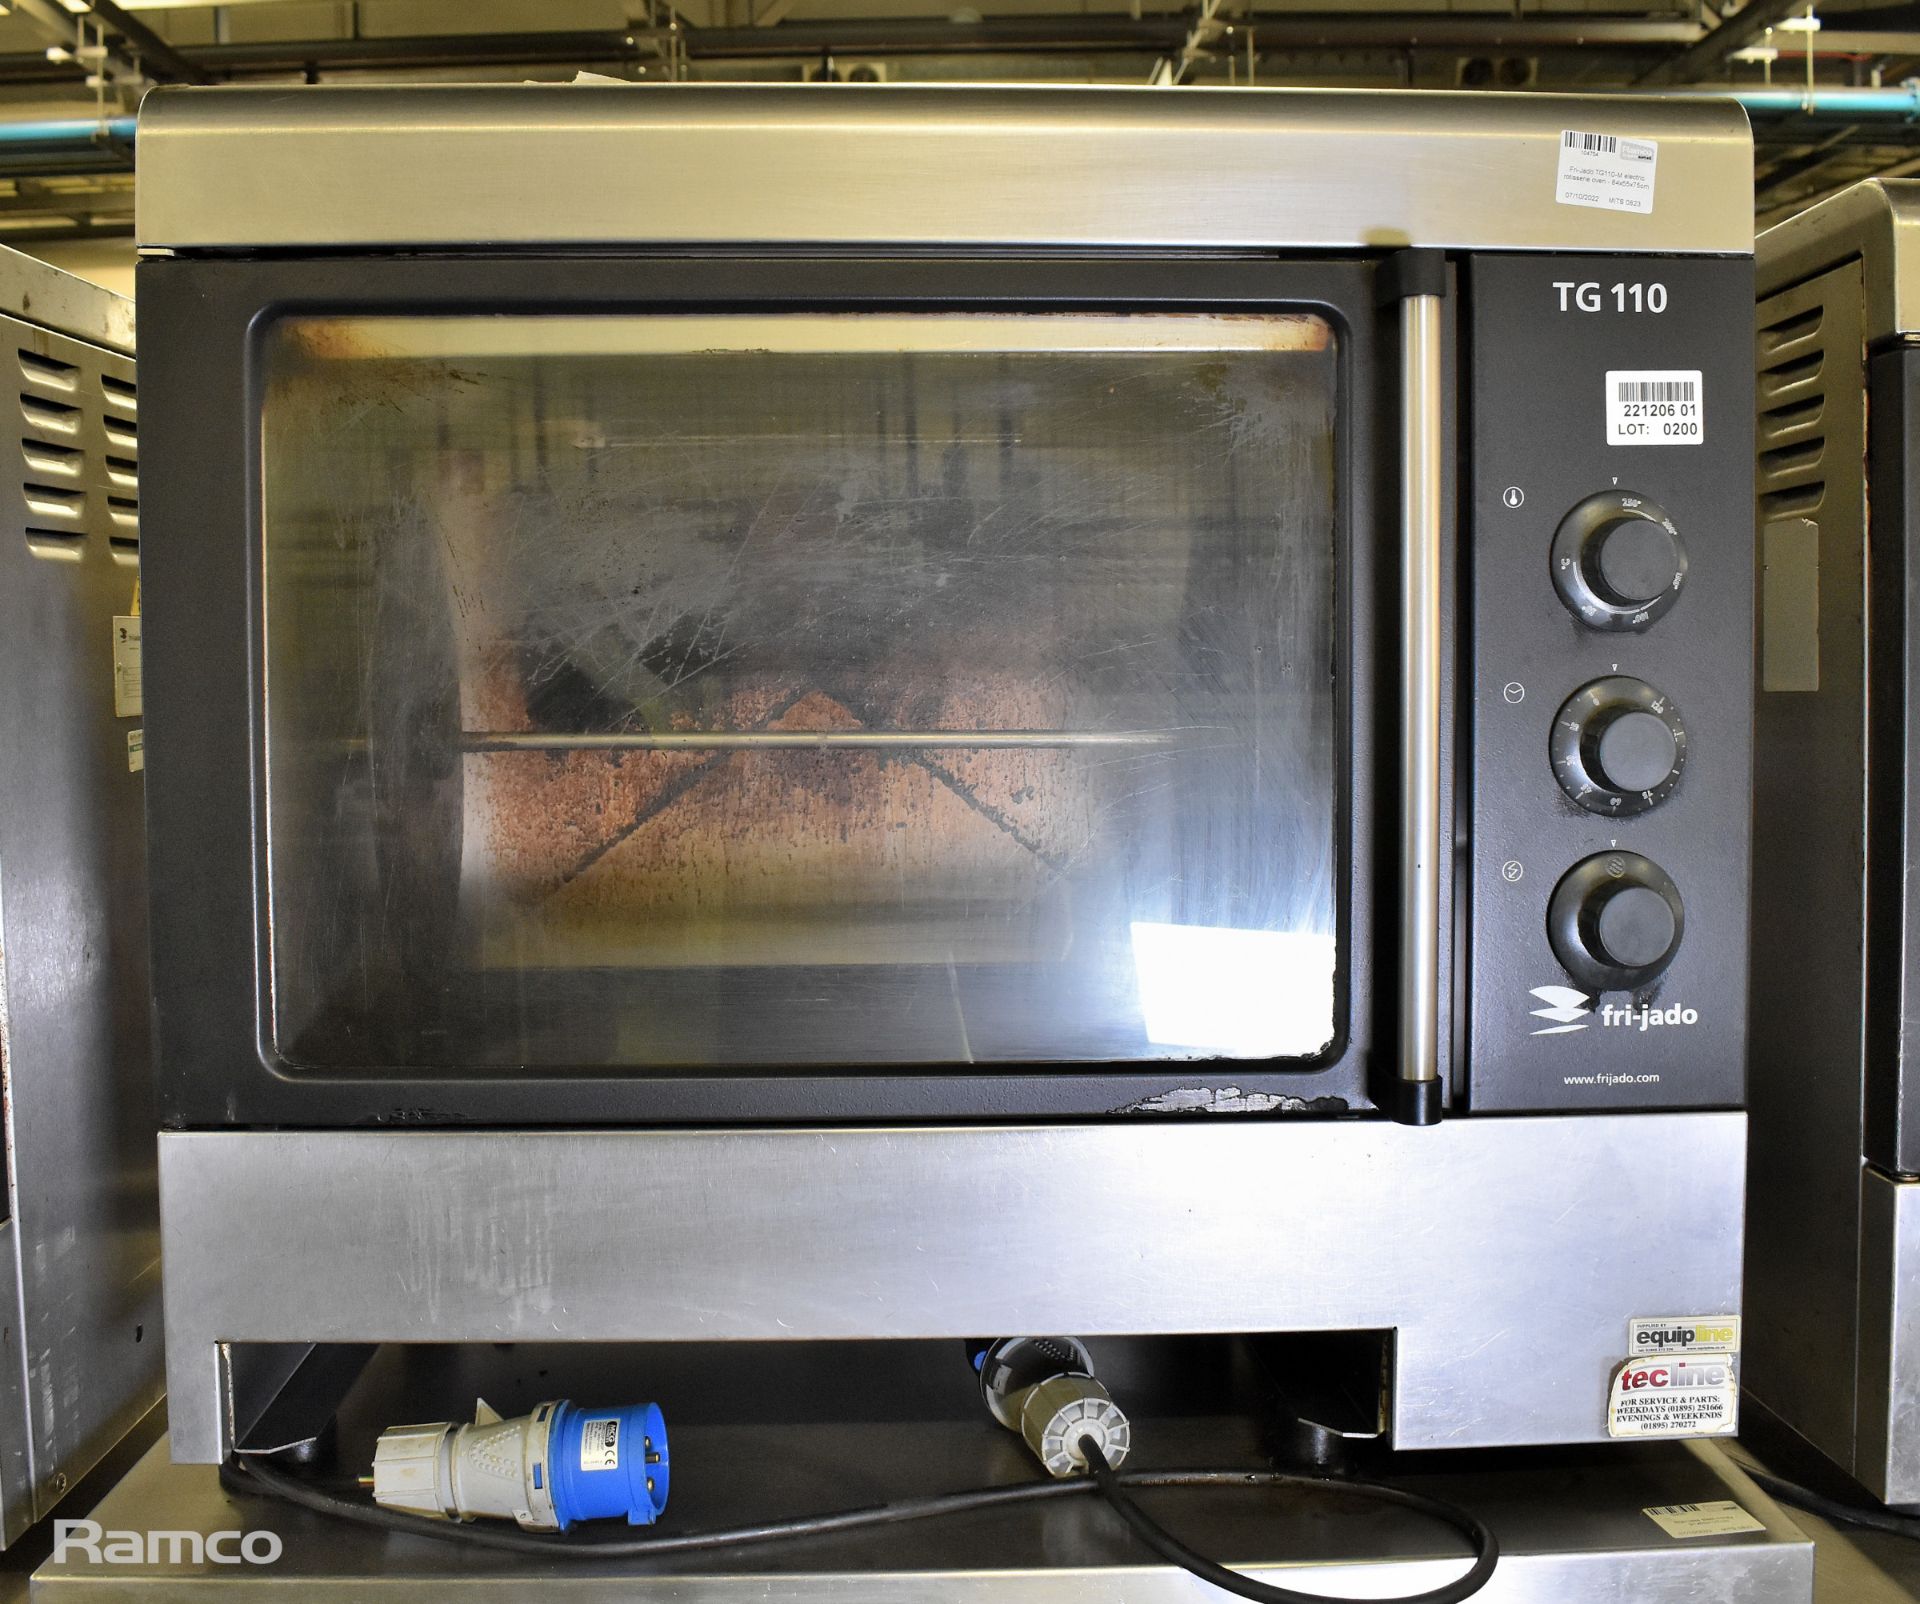 2x Fri-Jado TG110-M electric rotisserie ovens - 84 x 55 x 75cm, Stainless steel trolley - Image 2 of 6